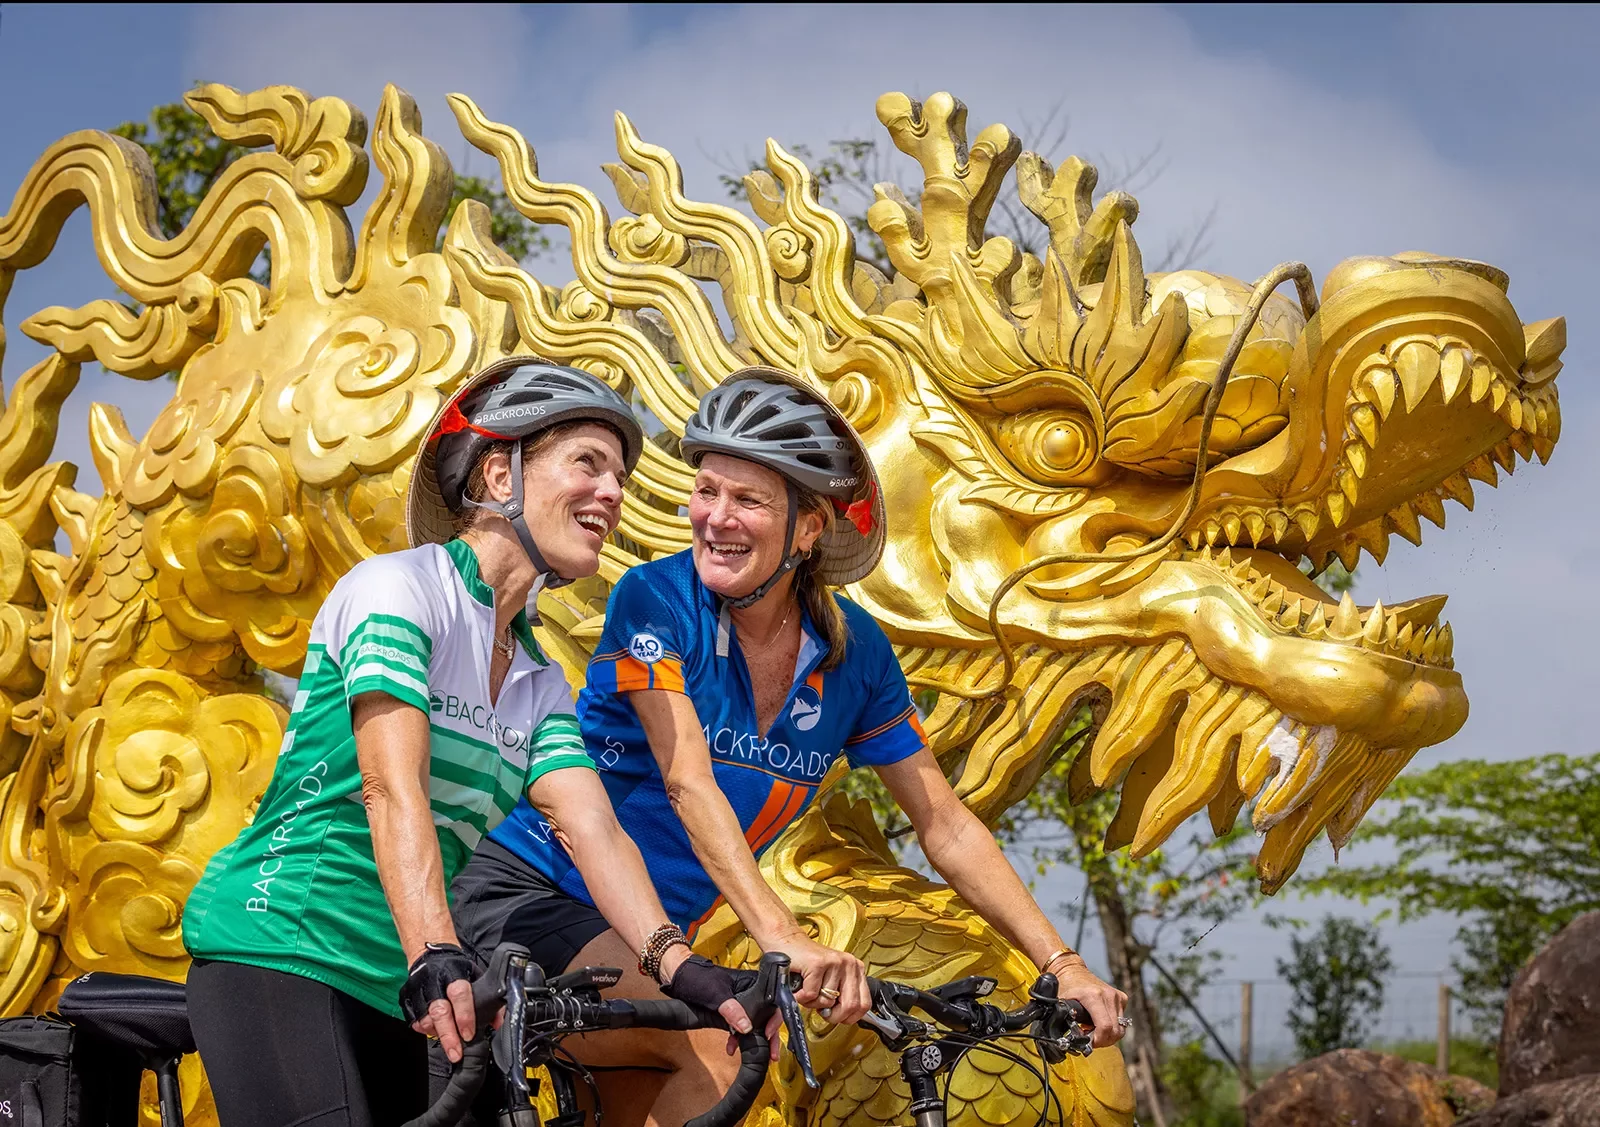 Women biking in front of a gold dragon statue